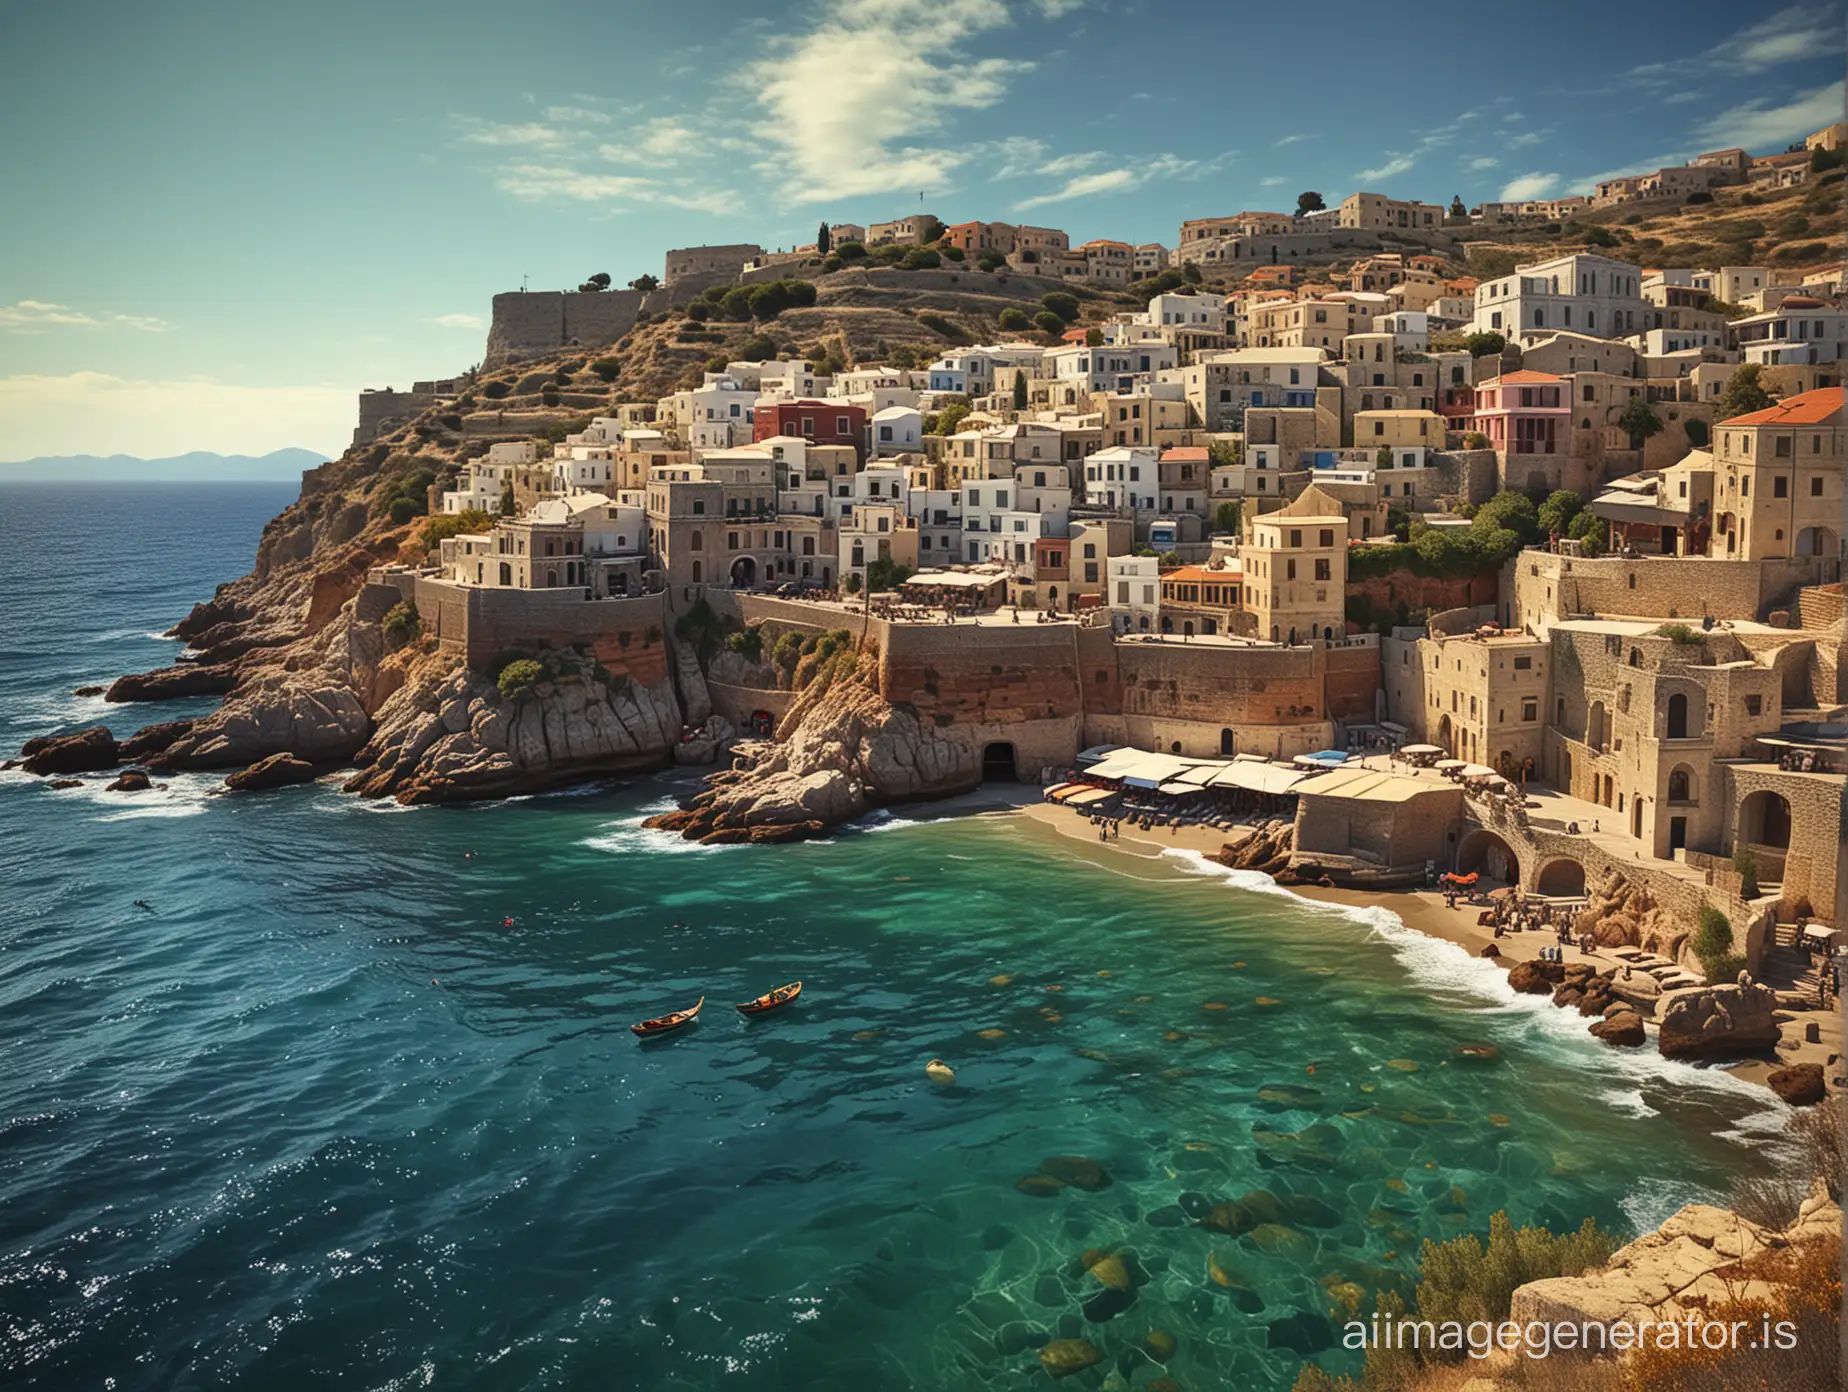 Vibrant-Crete-Digital-Art-of-a-Lush-Headland-Amidst-a-WineColored-Sea